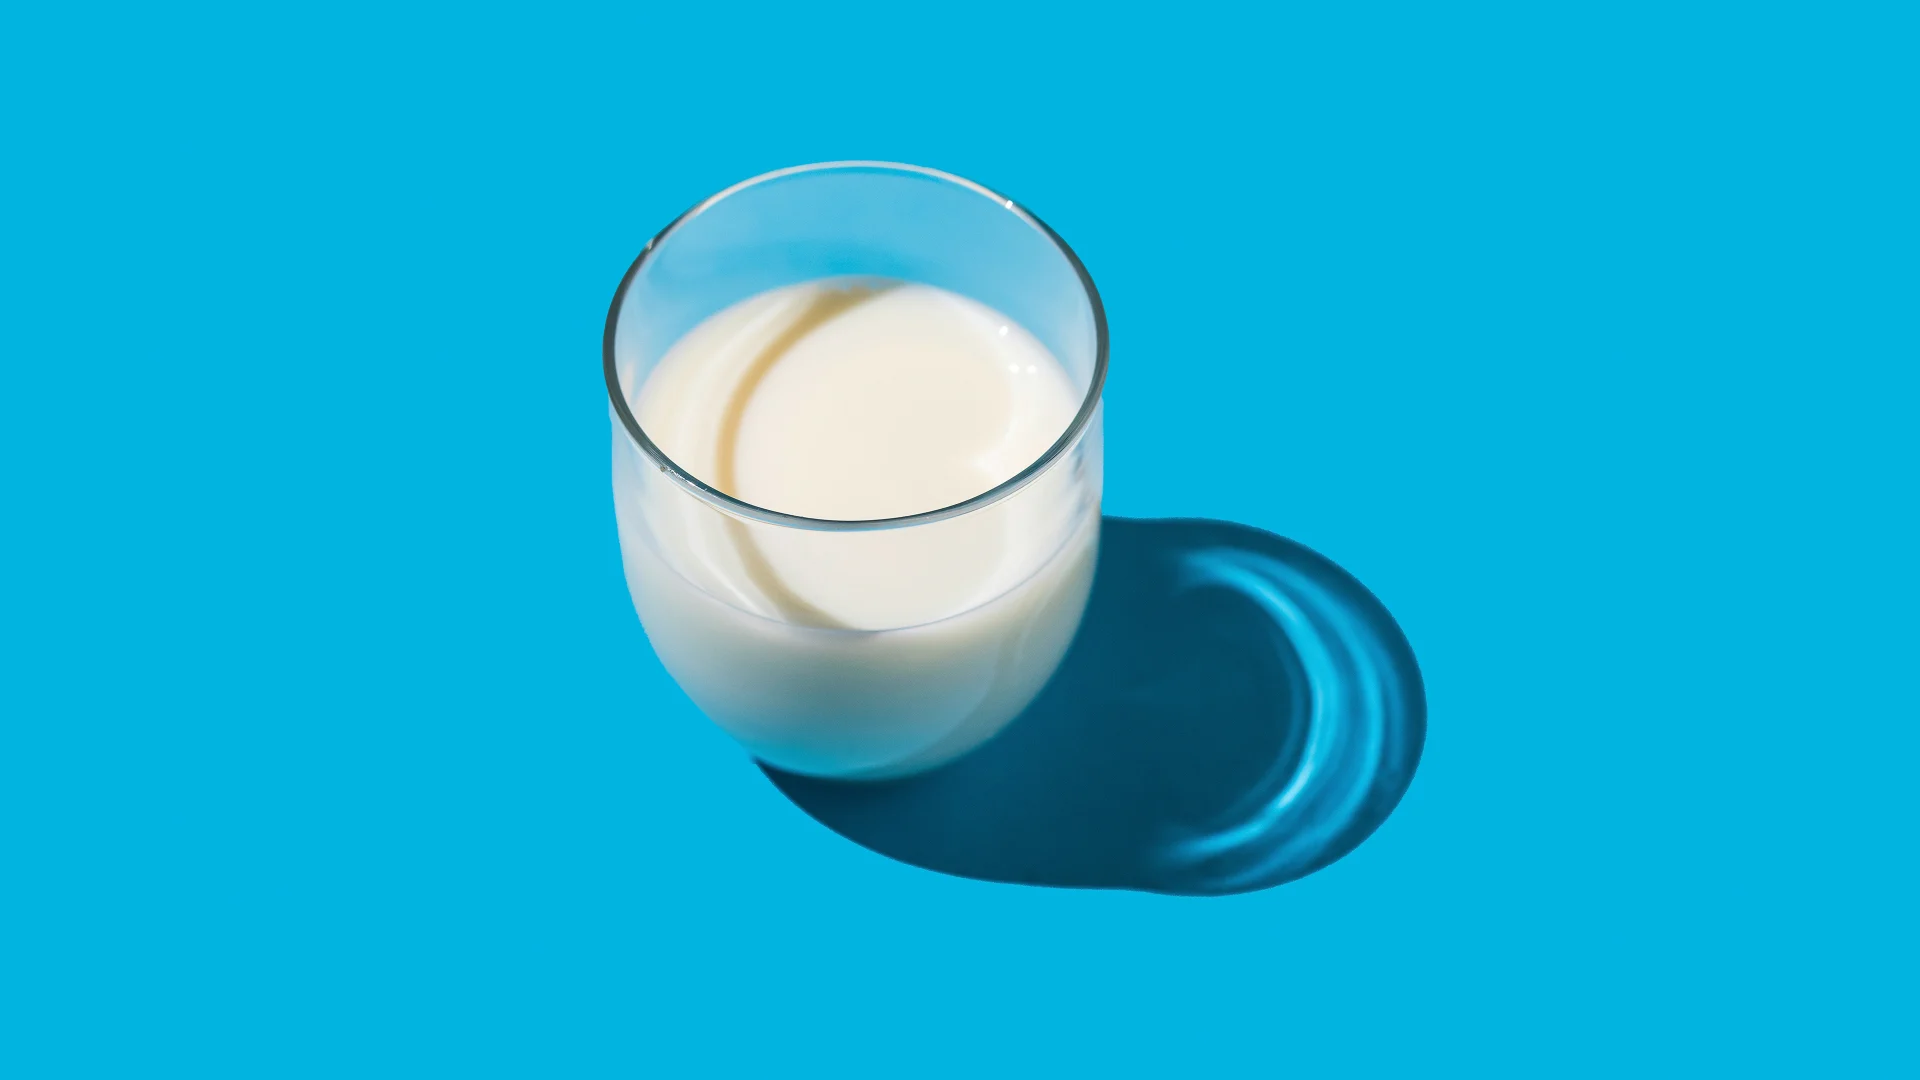 A glass of milk on a light blue background